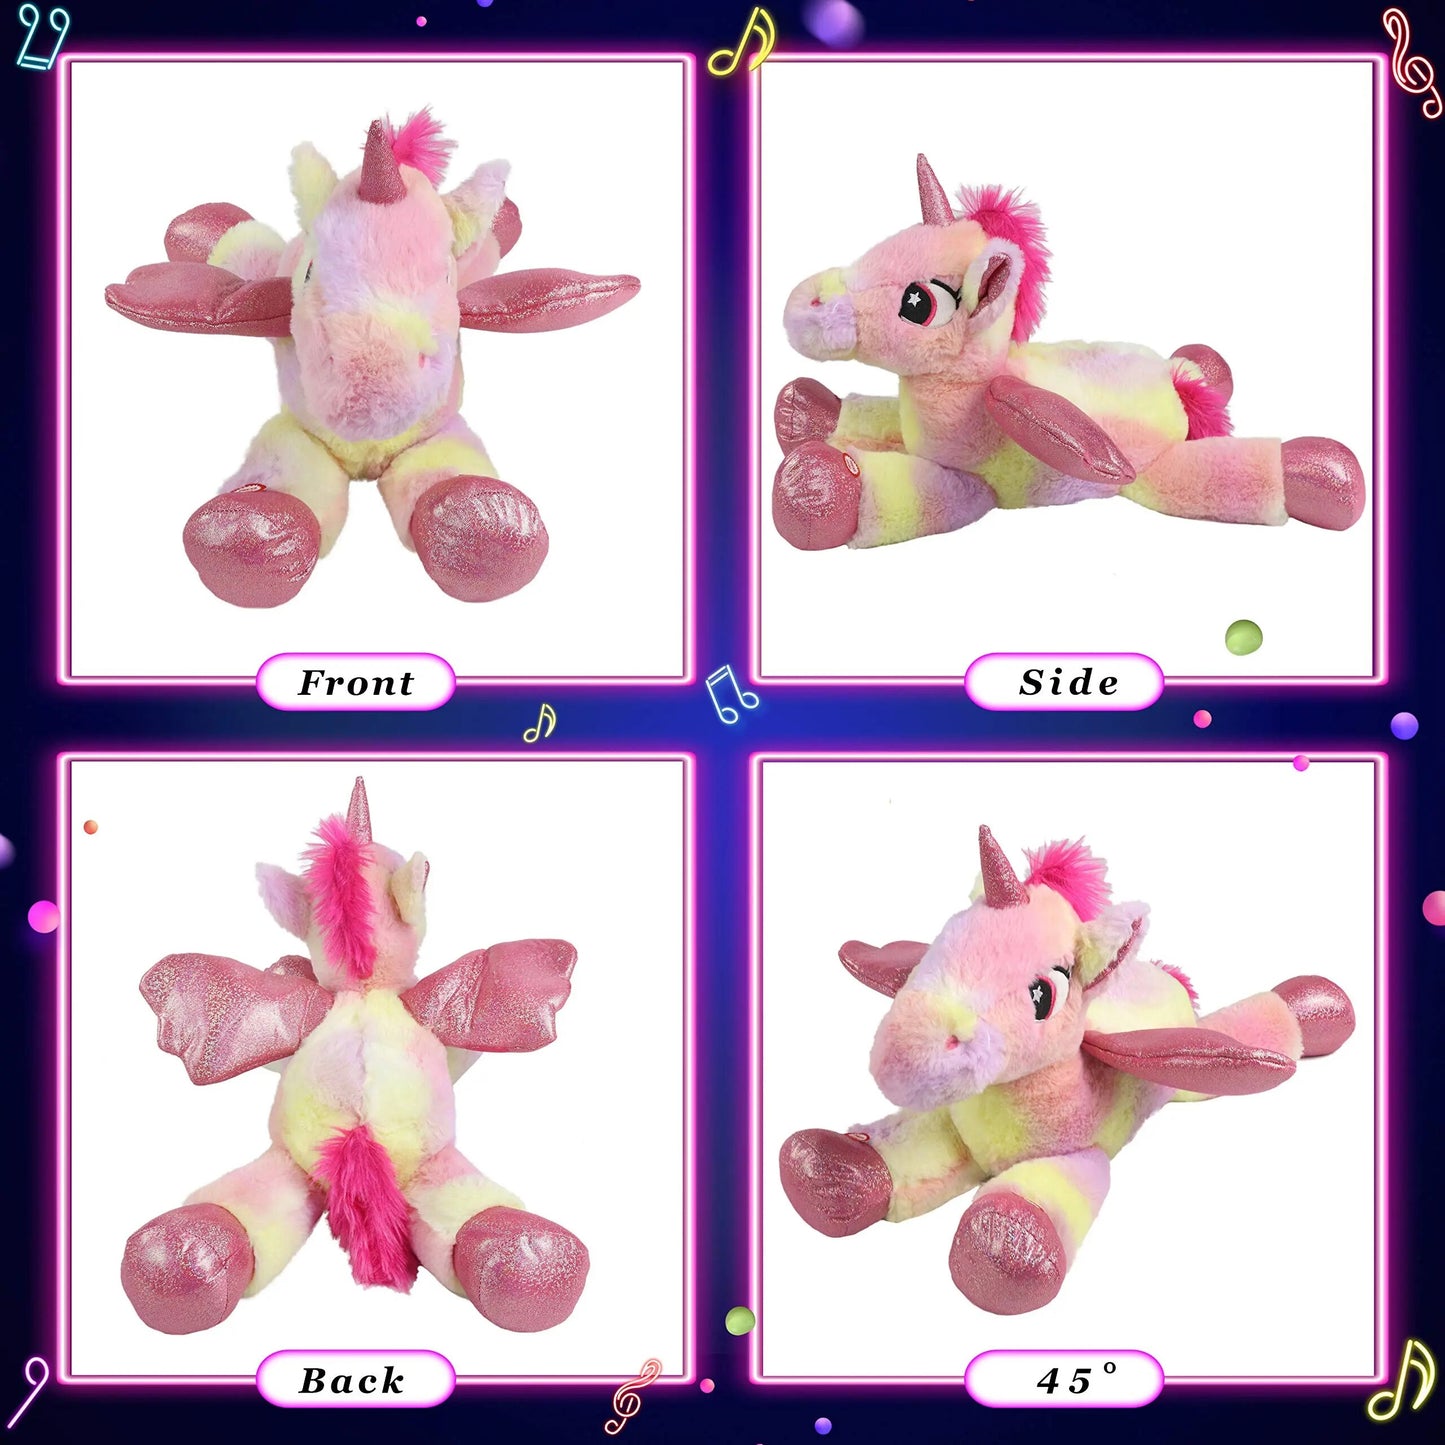 Rainbow LED Plush Toys Musical Throw Pillows Unicorn Lullaby Soft Stuffed Animals Birthday Gift for Kids Girls Luminous Toy